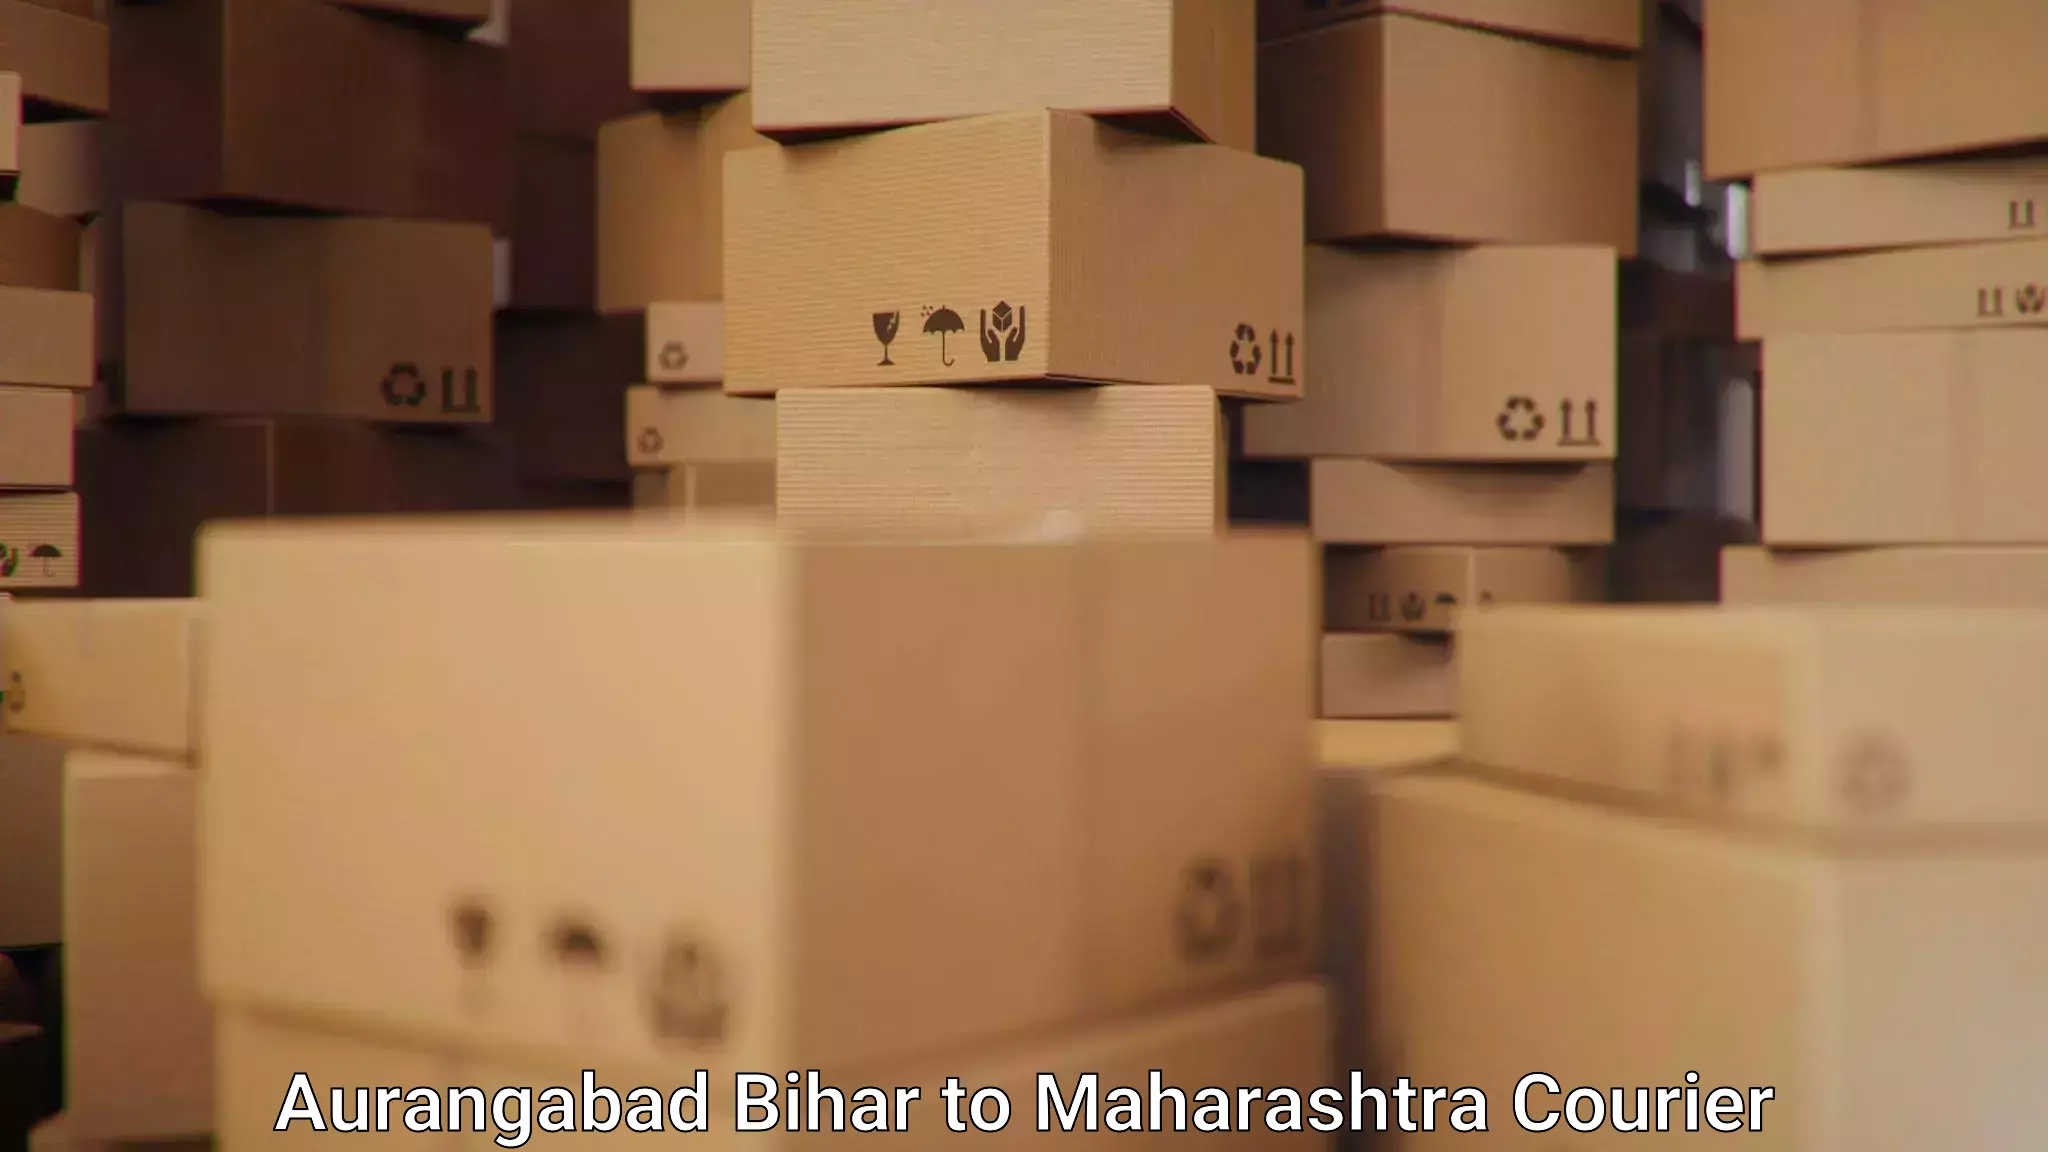 24/7 courier service Aurangabad Bihar to Parbhani